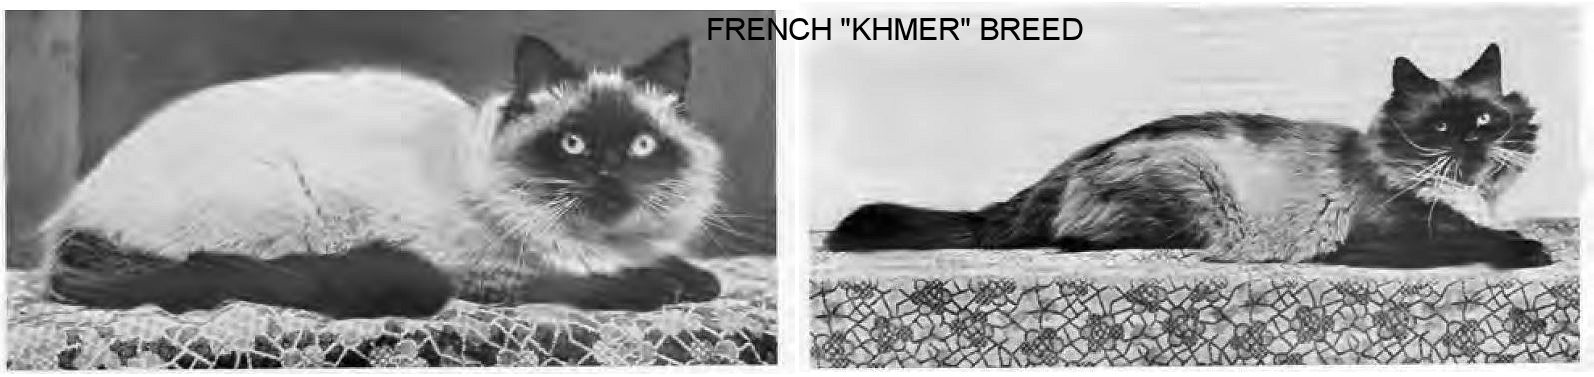 khmer cat breed